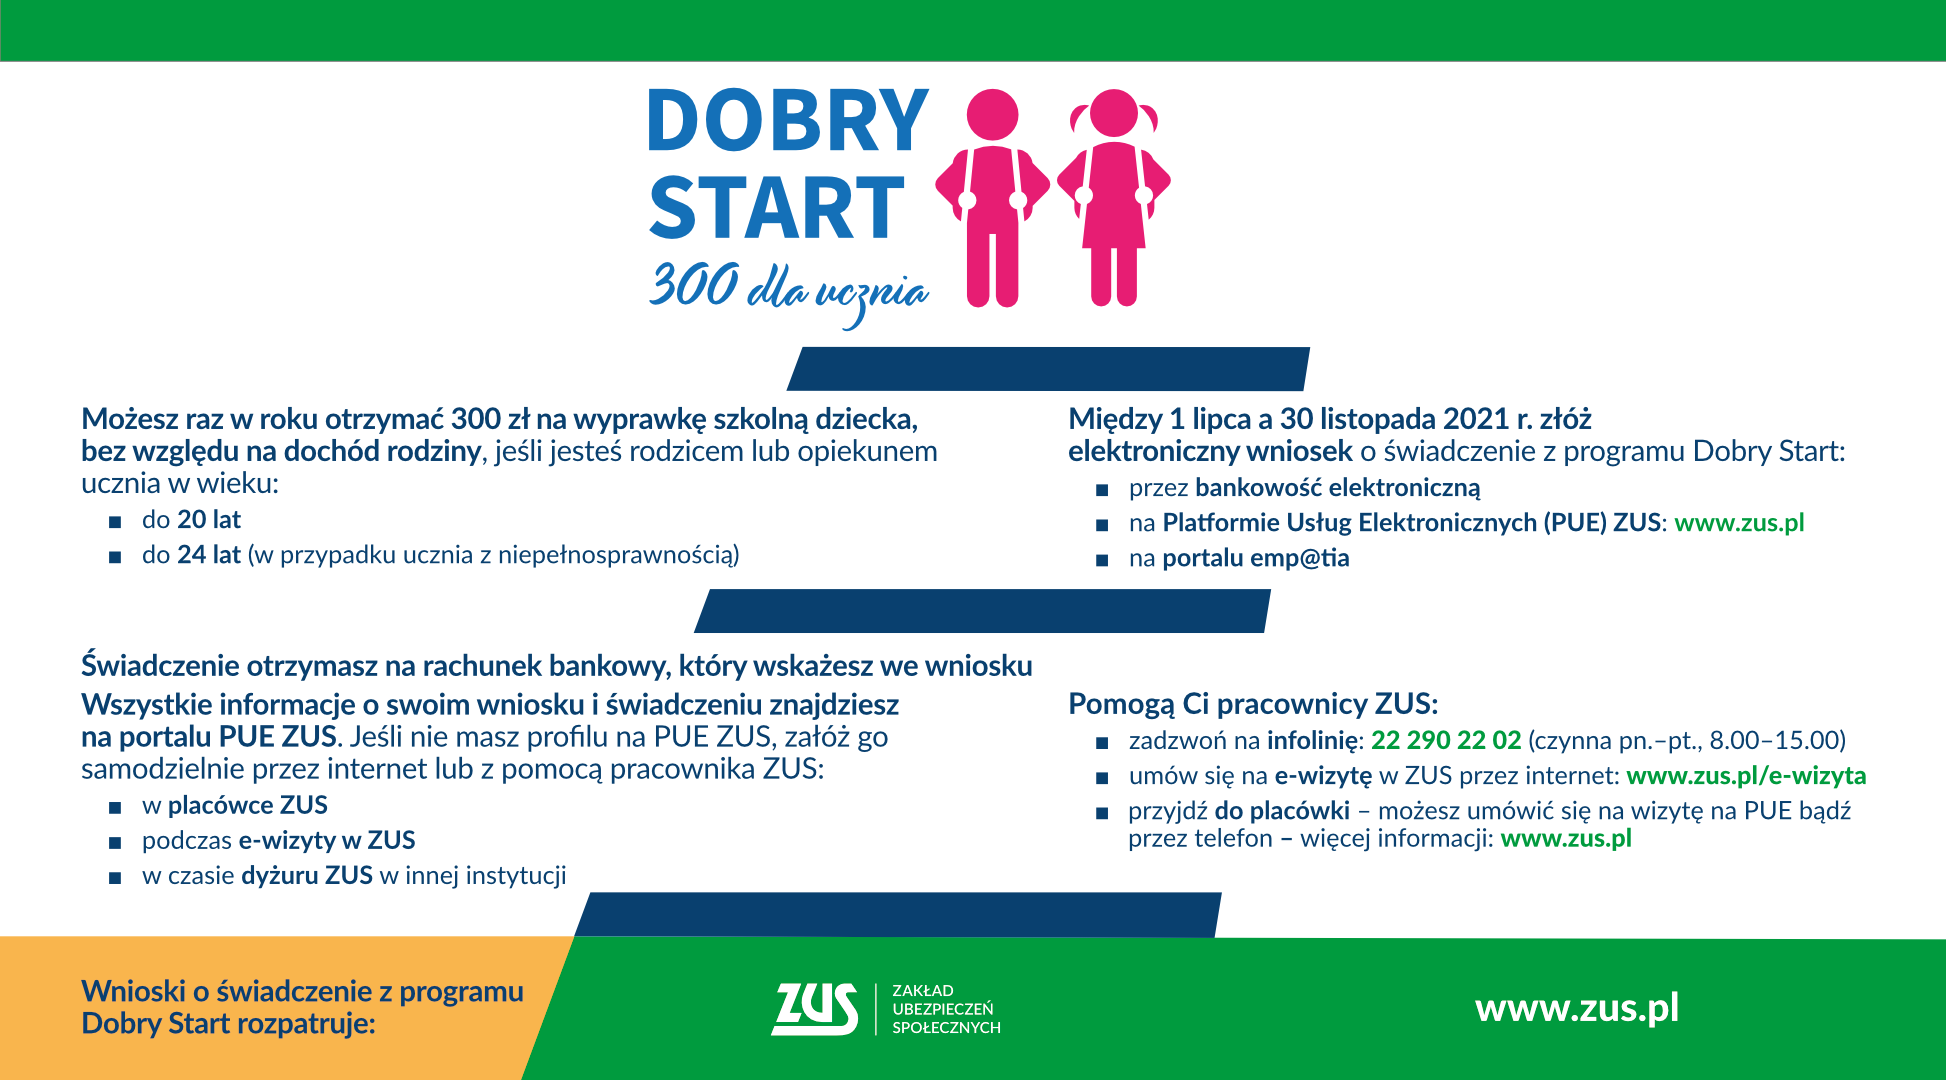 Infografika opisująca program Dobry Start